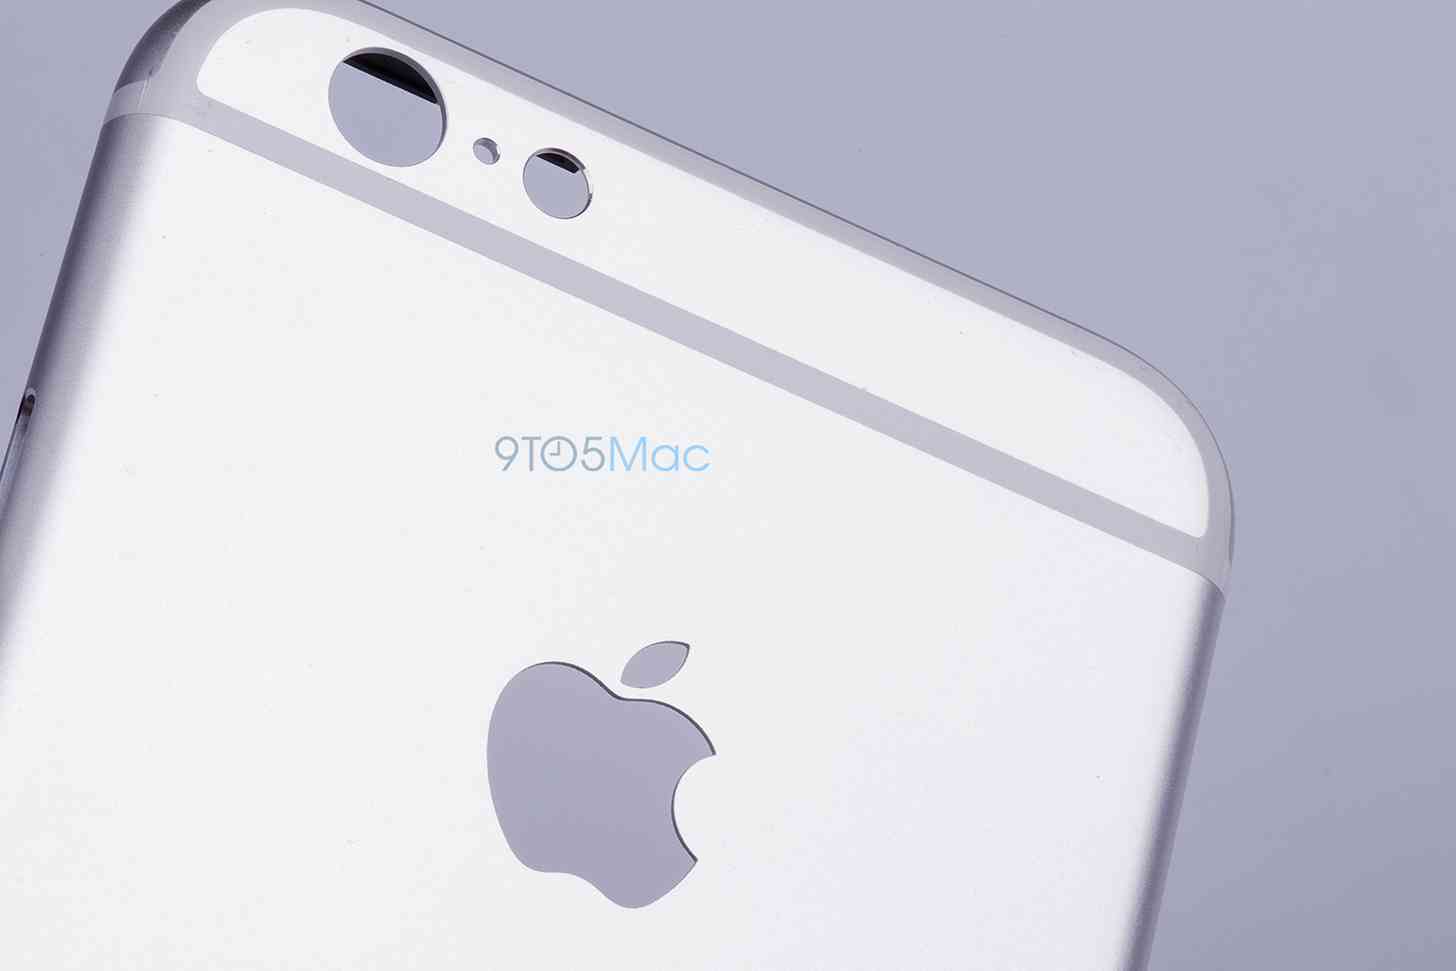 iPhone 6s rear shell leak large